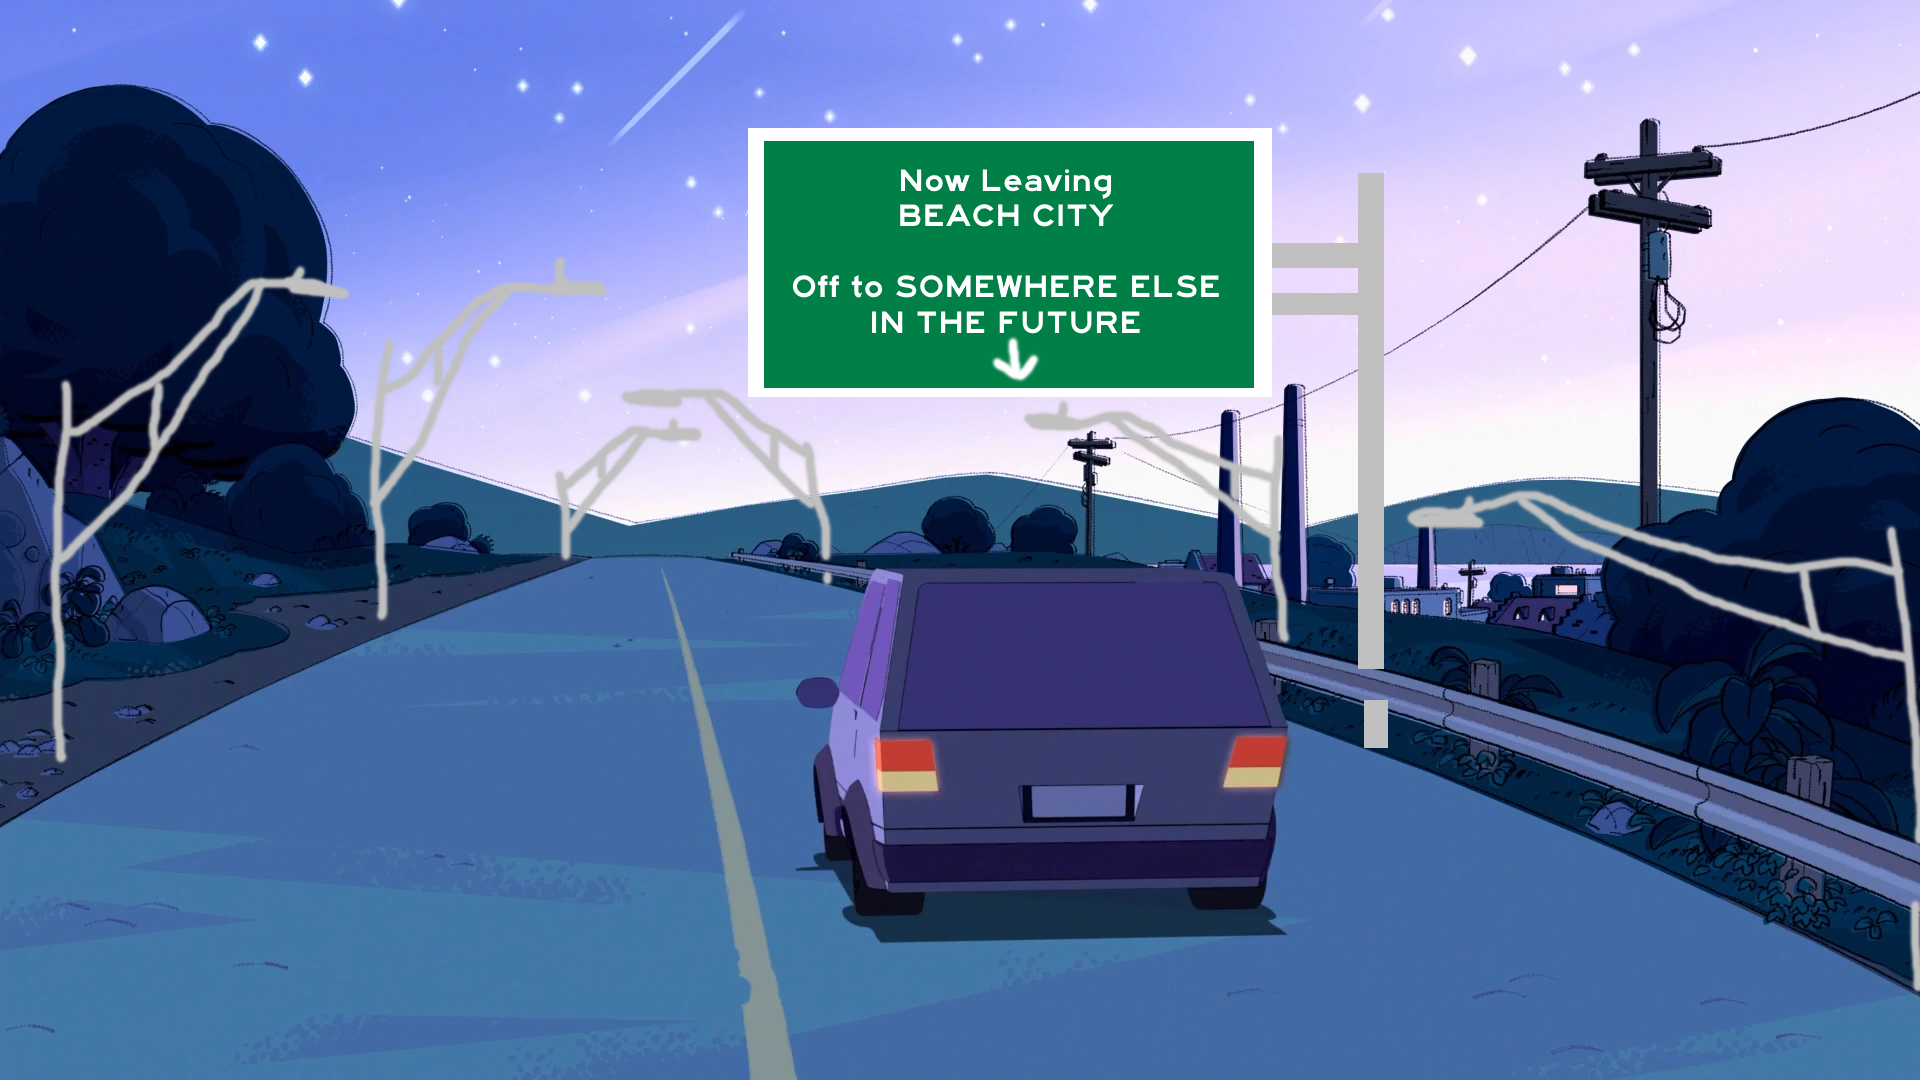 Steven Universe Left Beach City by MJEGameandComicFan89 on DeviantArt